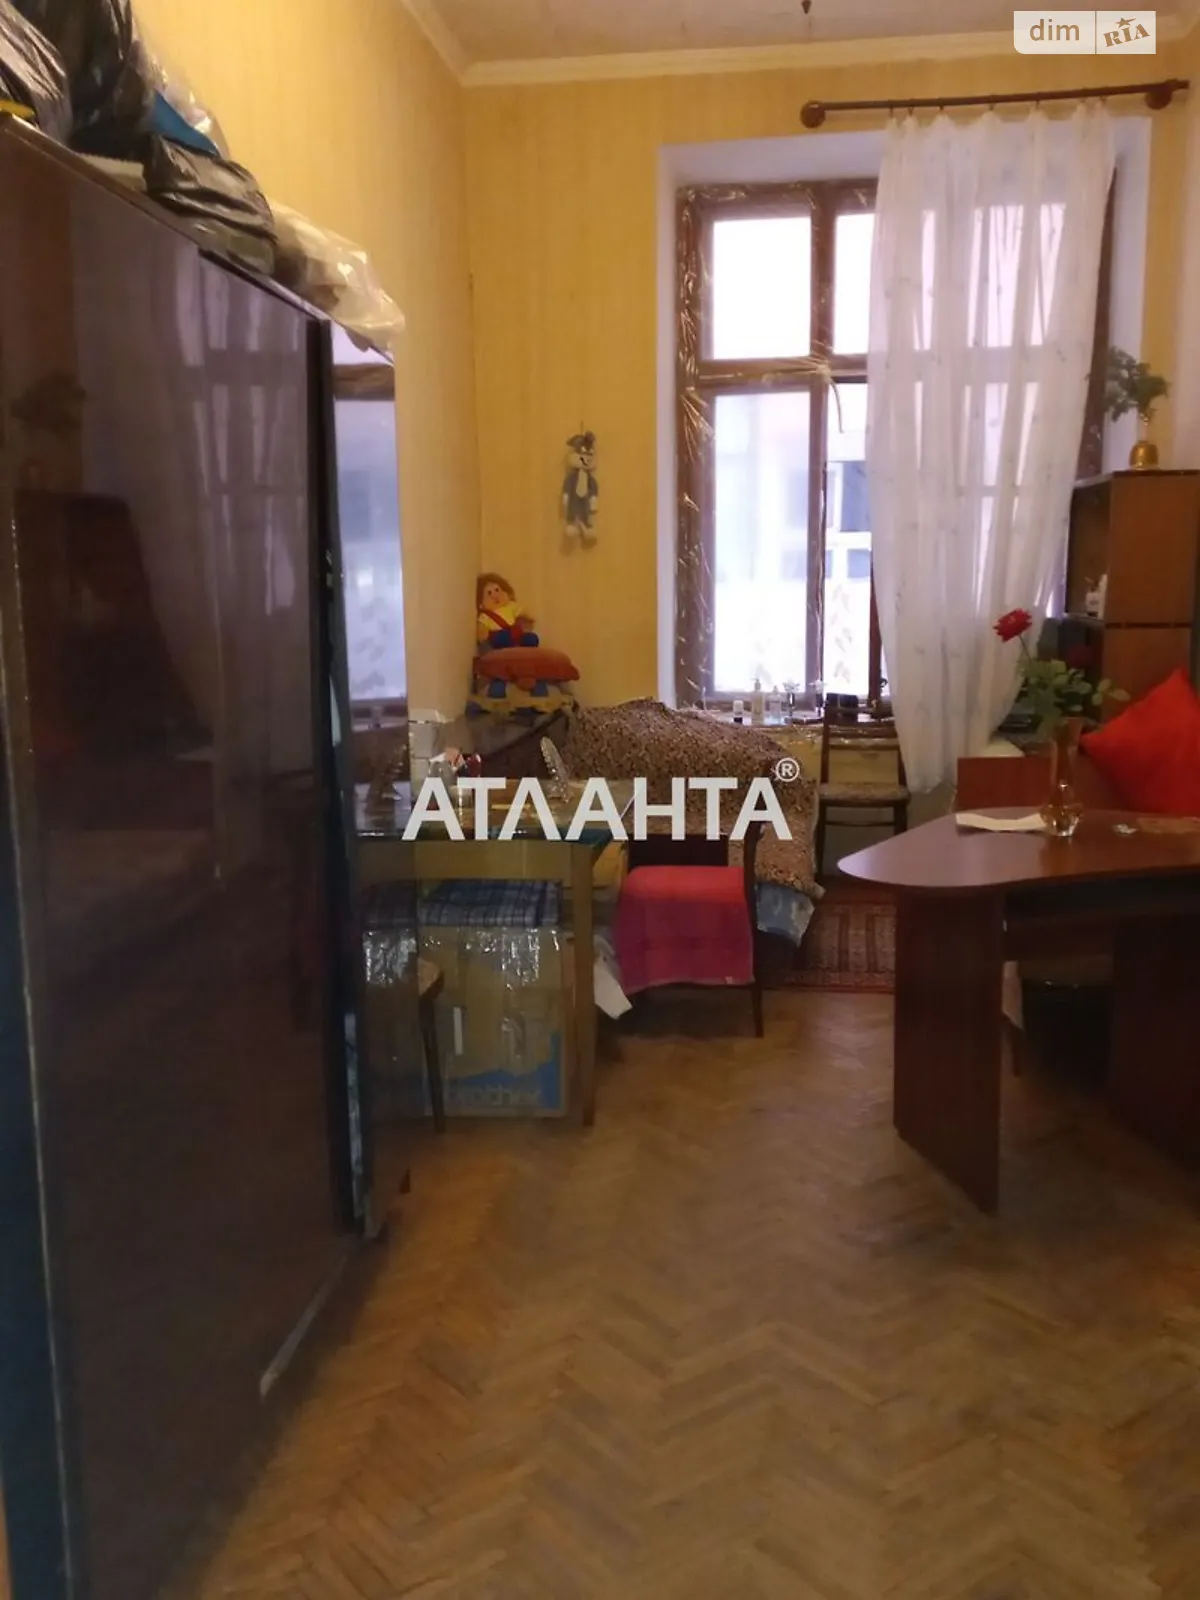 Продается комната 18 кв. м в Одессе, цена: 12500 $ - фото 1